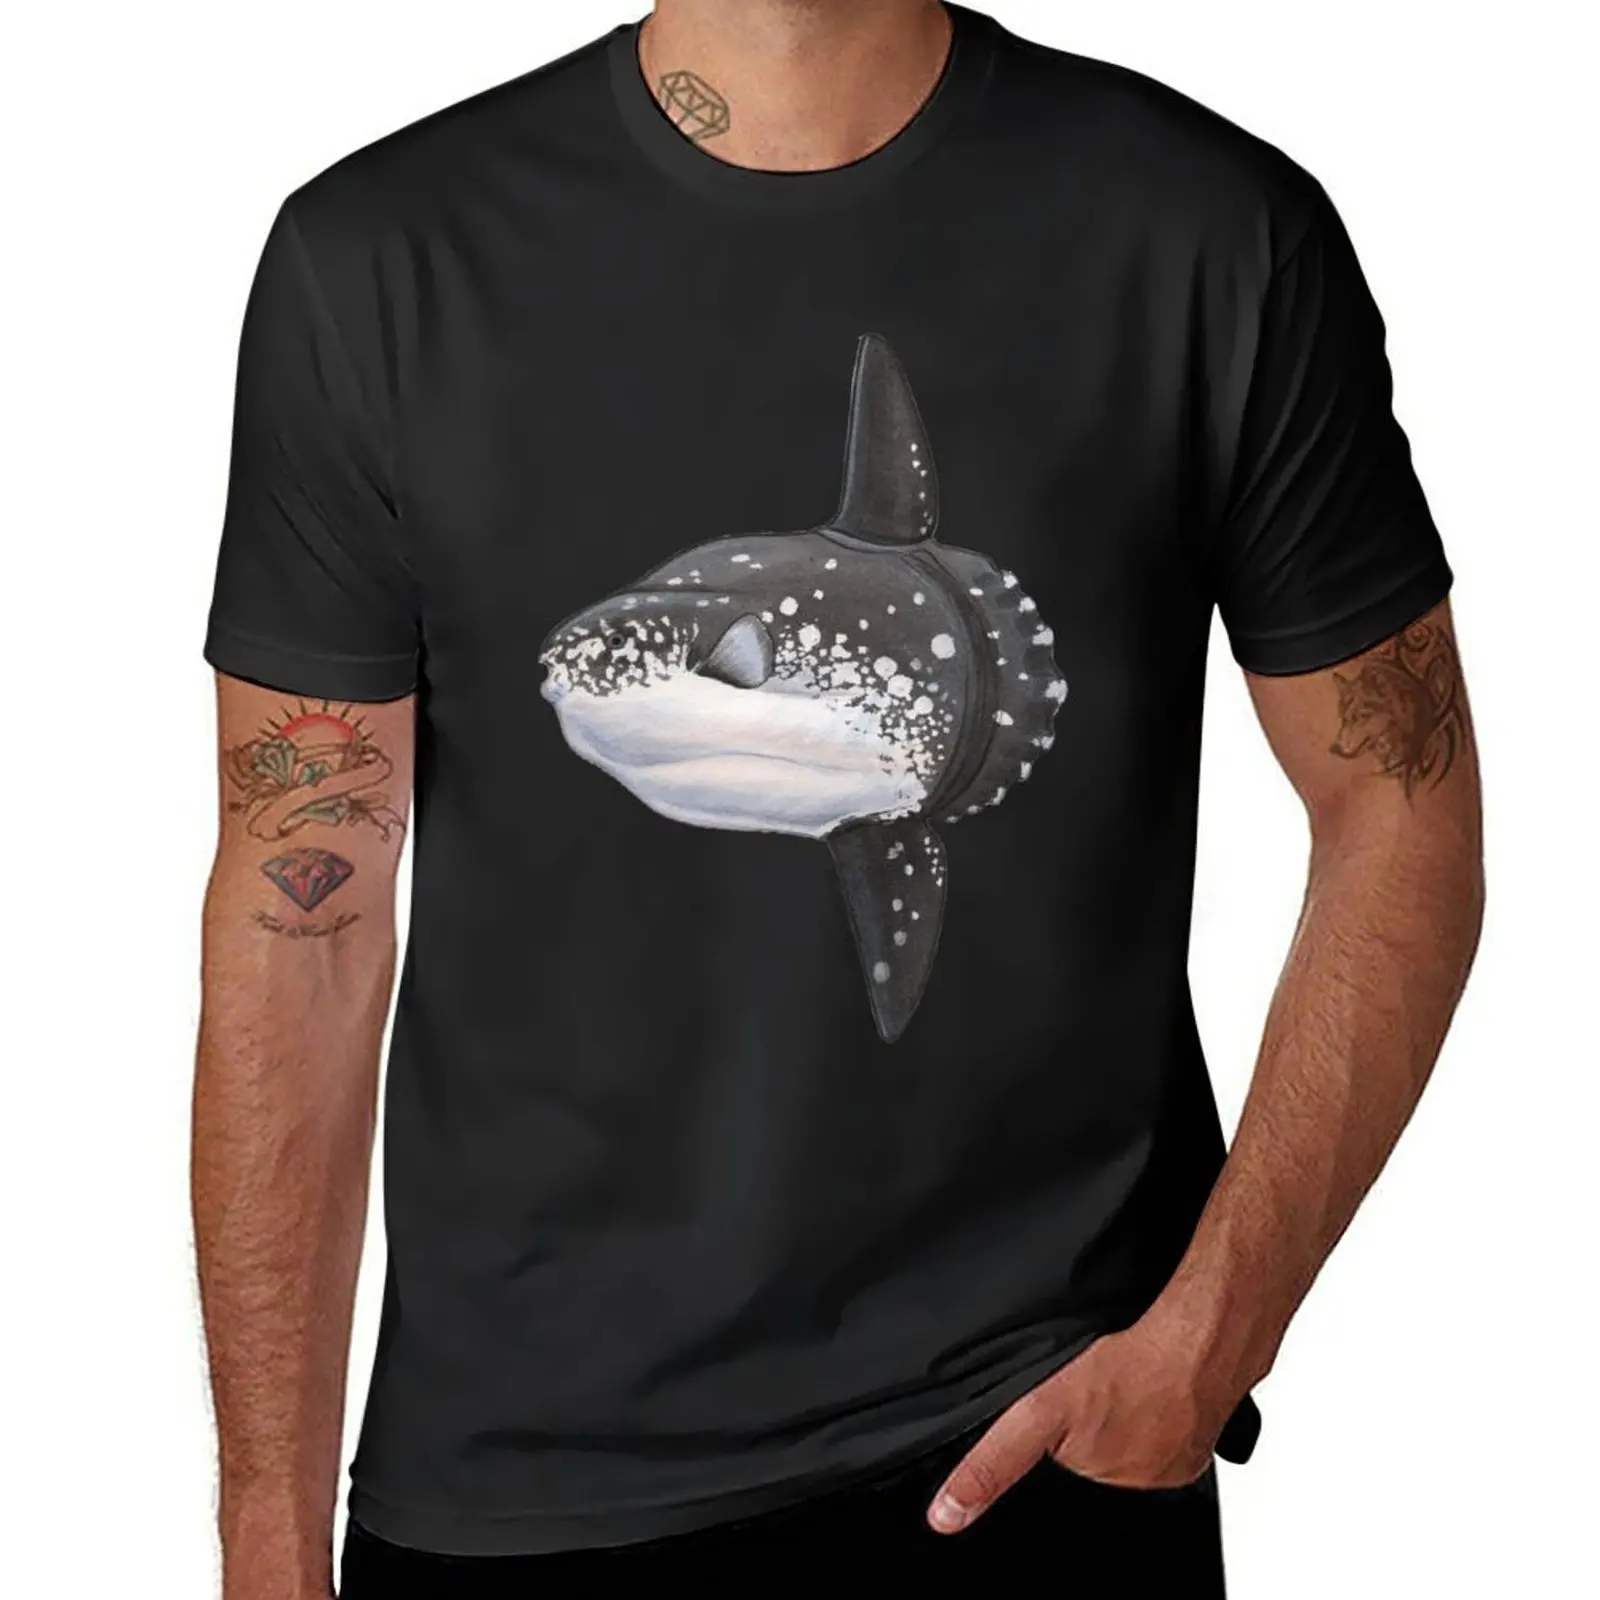 New Ocean sunfish, mola mola T-Shirt tops Tee shirt funny t shirt sublime t shirt designer t shirt men